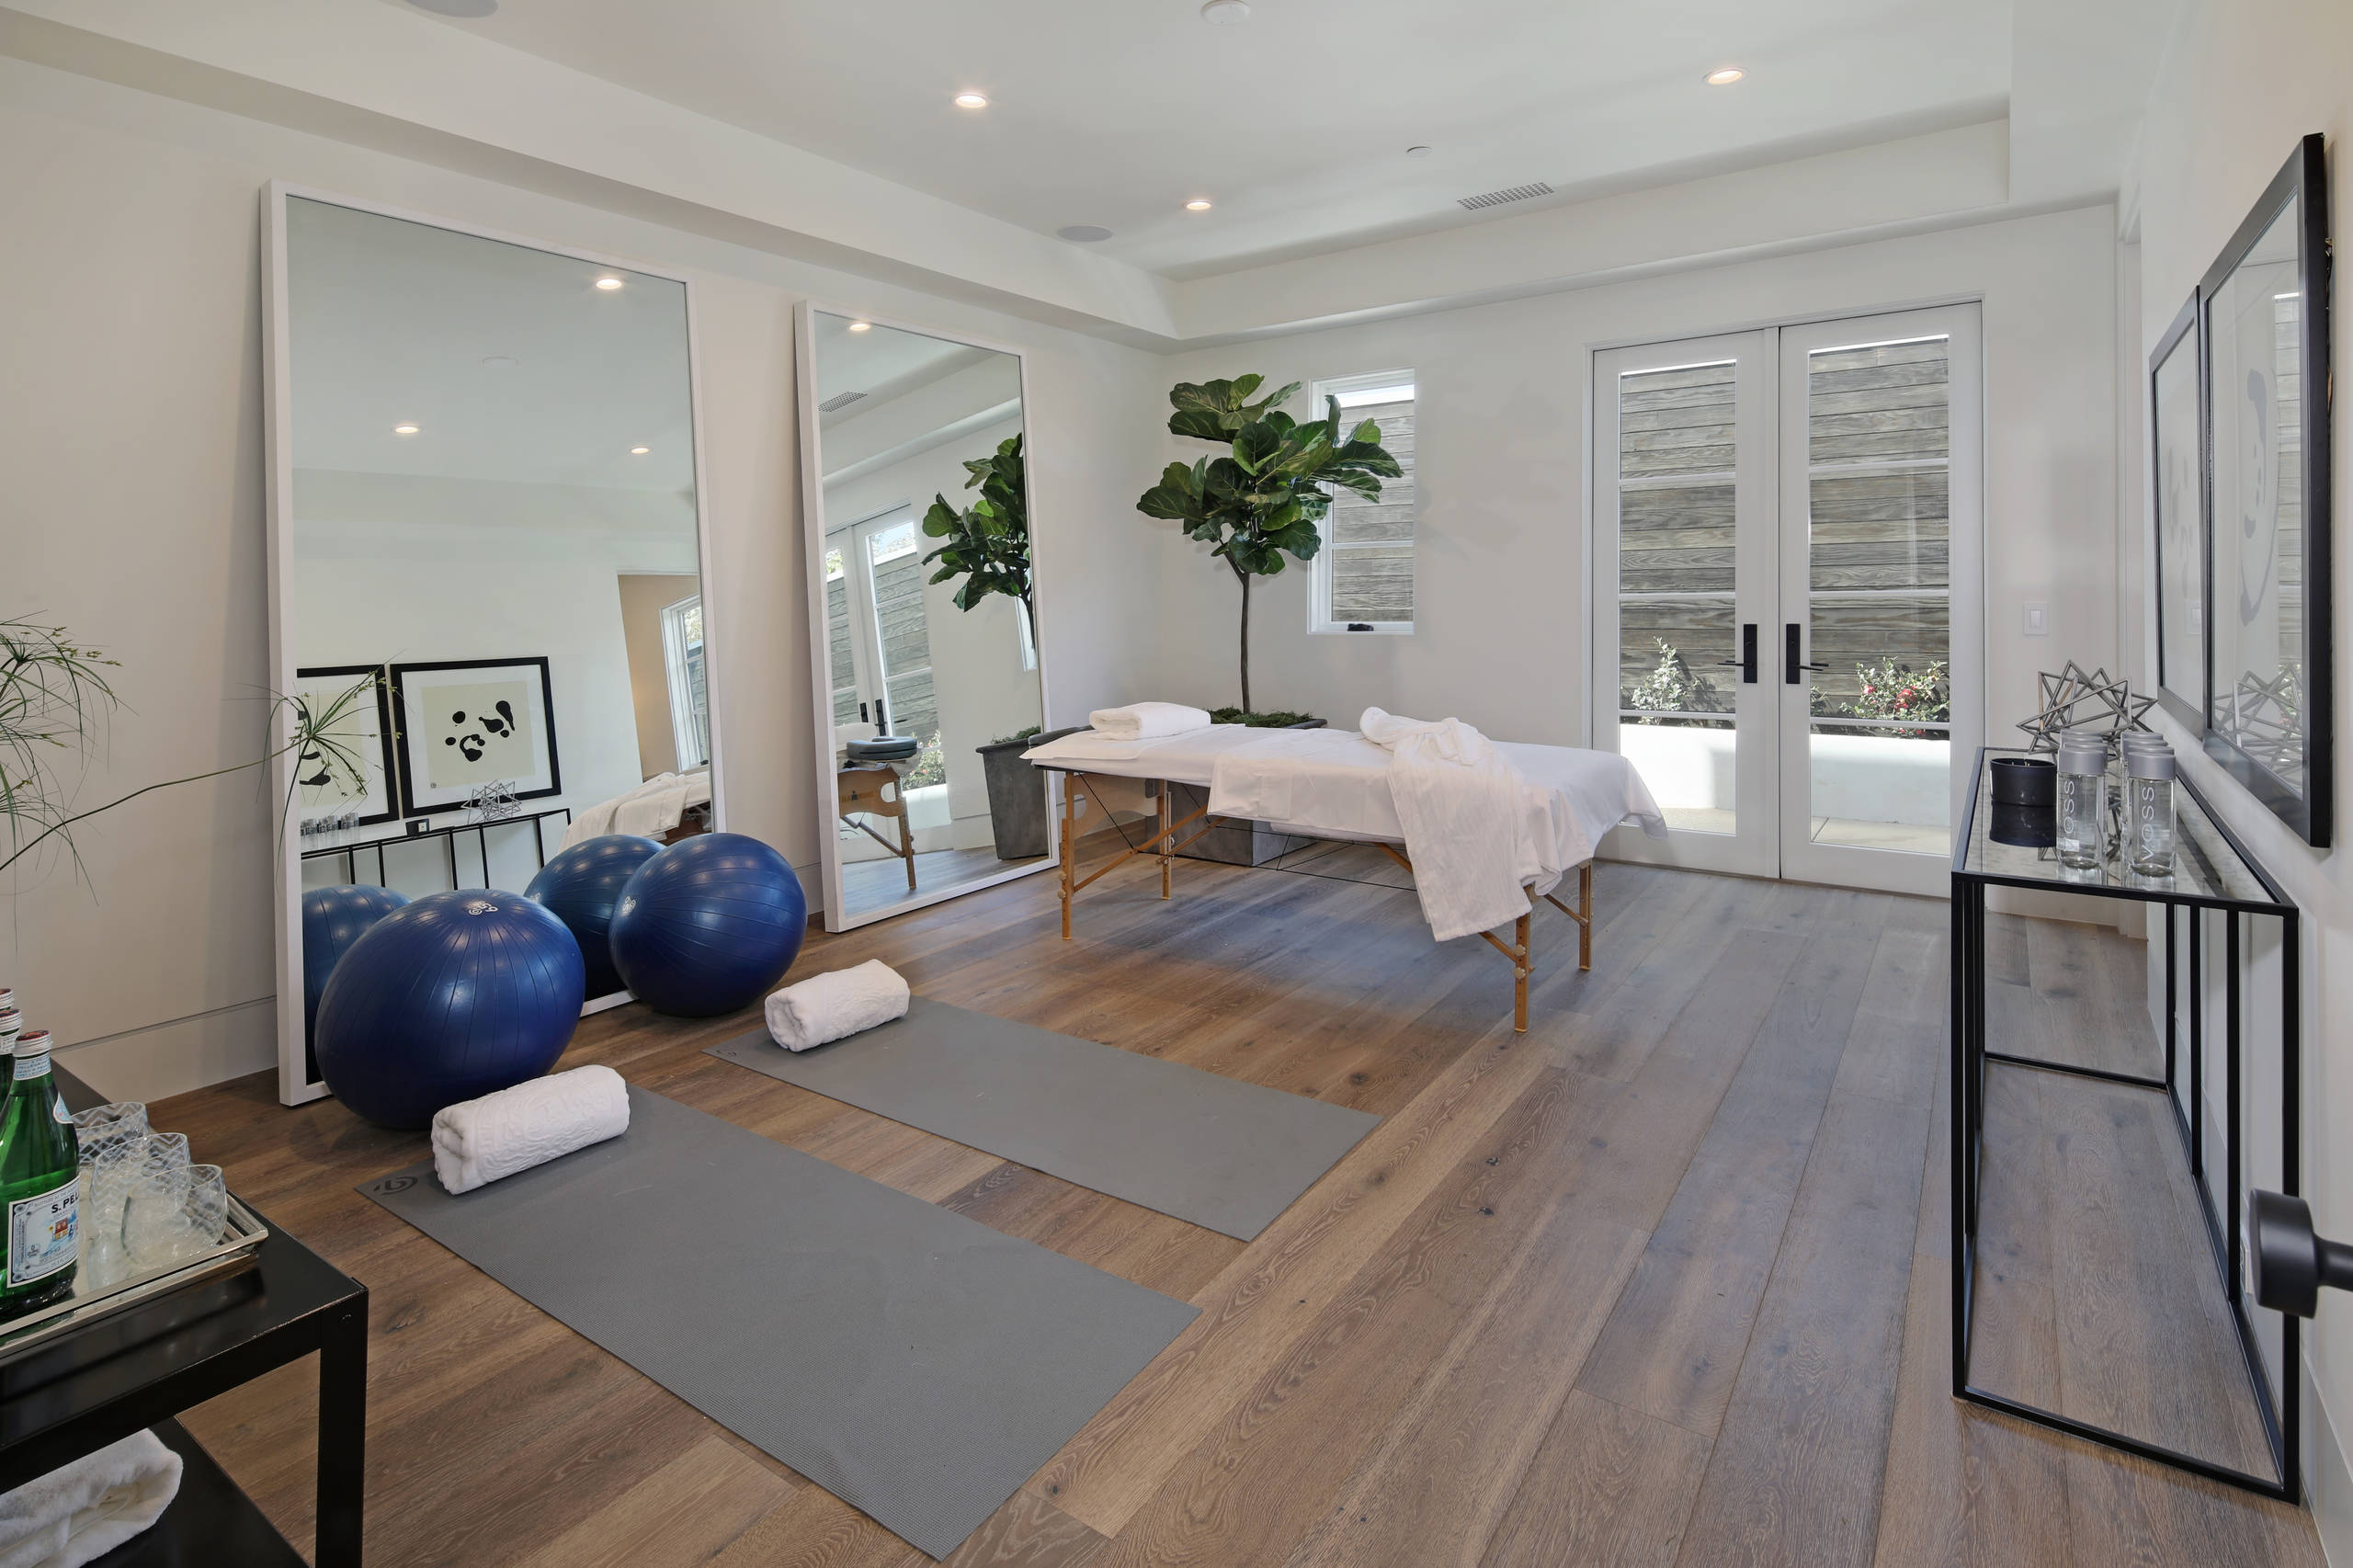 75 Home Yoga Studio Ideas You'll Love - May, 2023 | Houzz